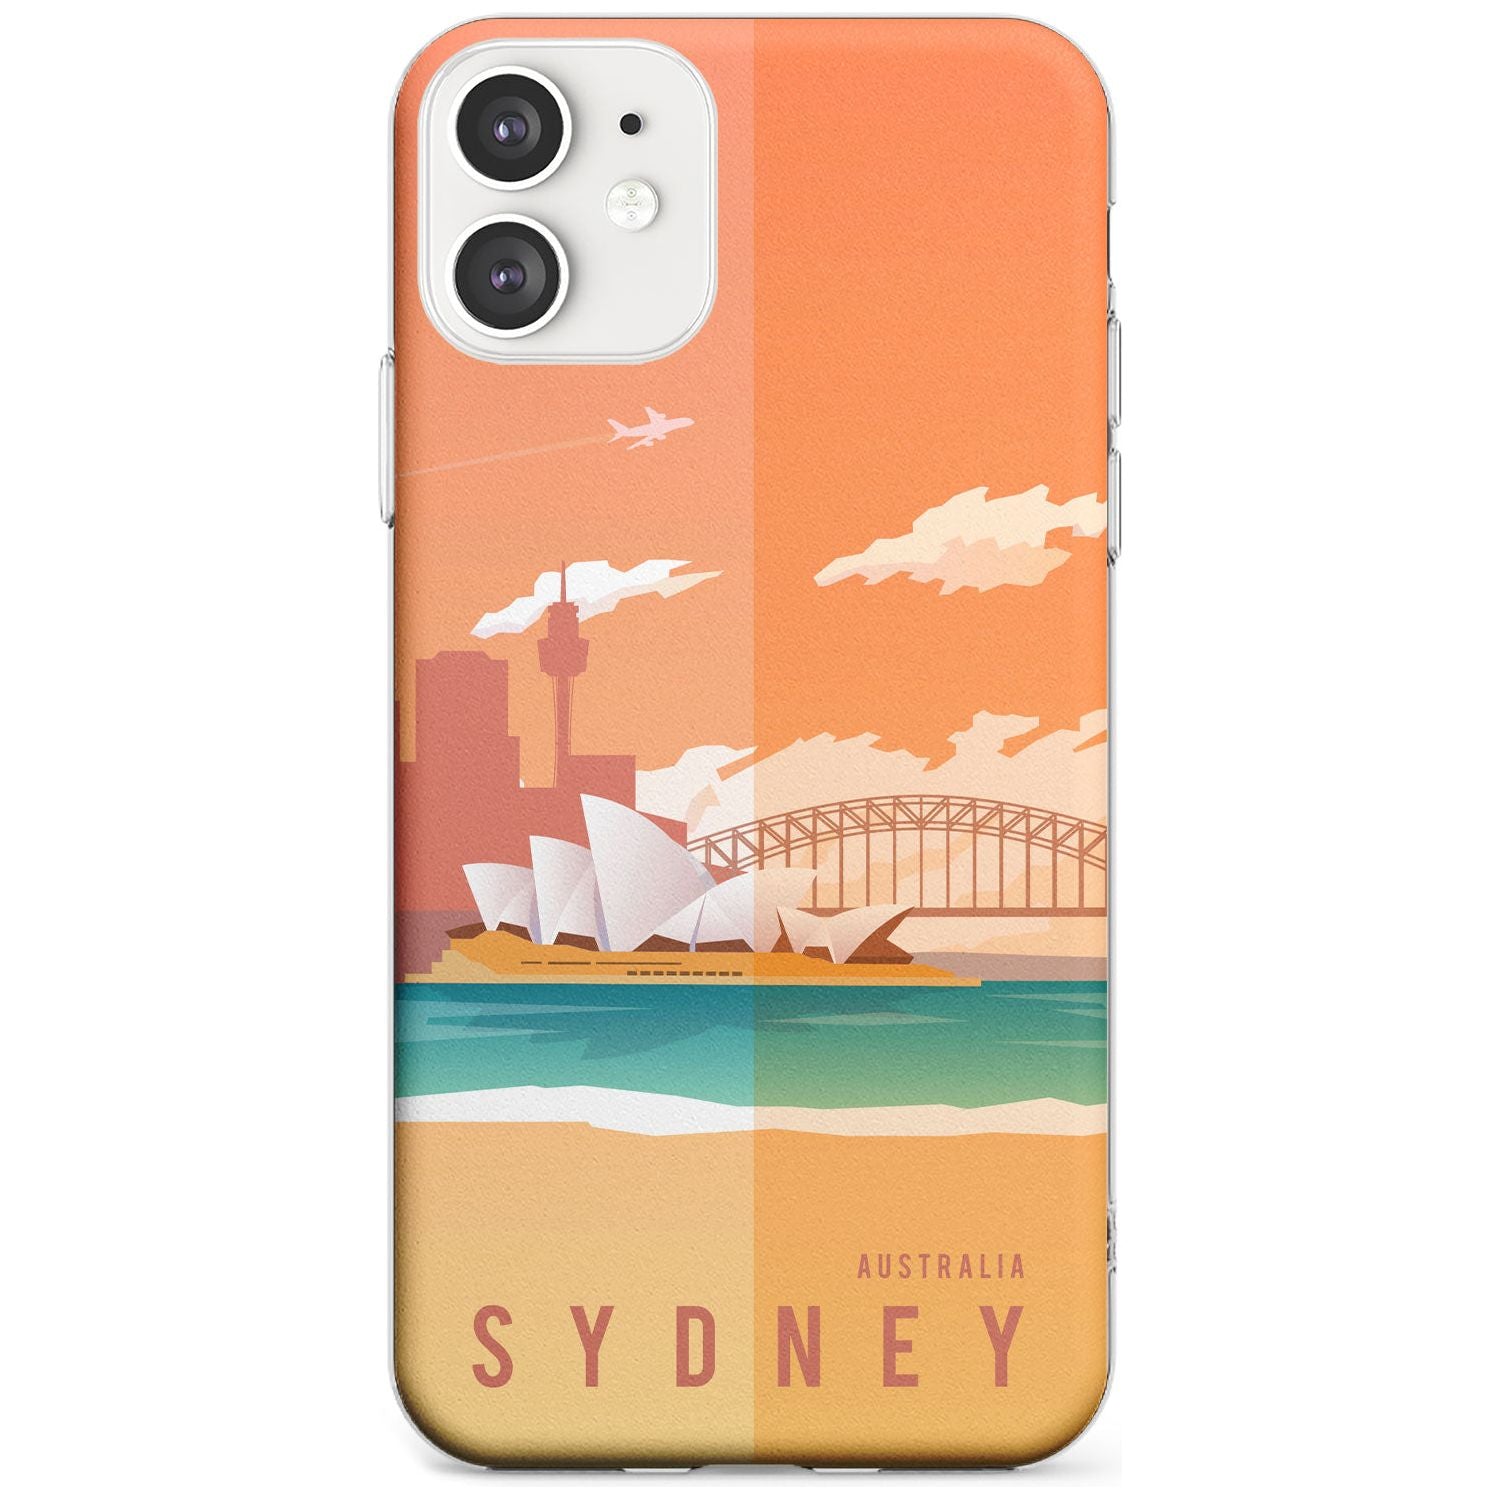 Vintage Travel Poster Sydney Slim TPU Phone Case for iPhone 11